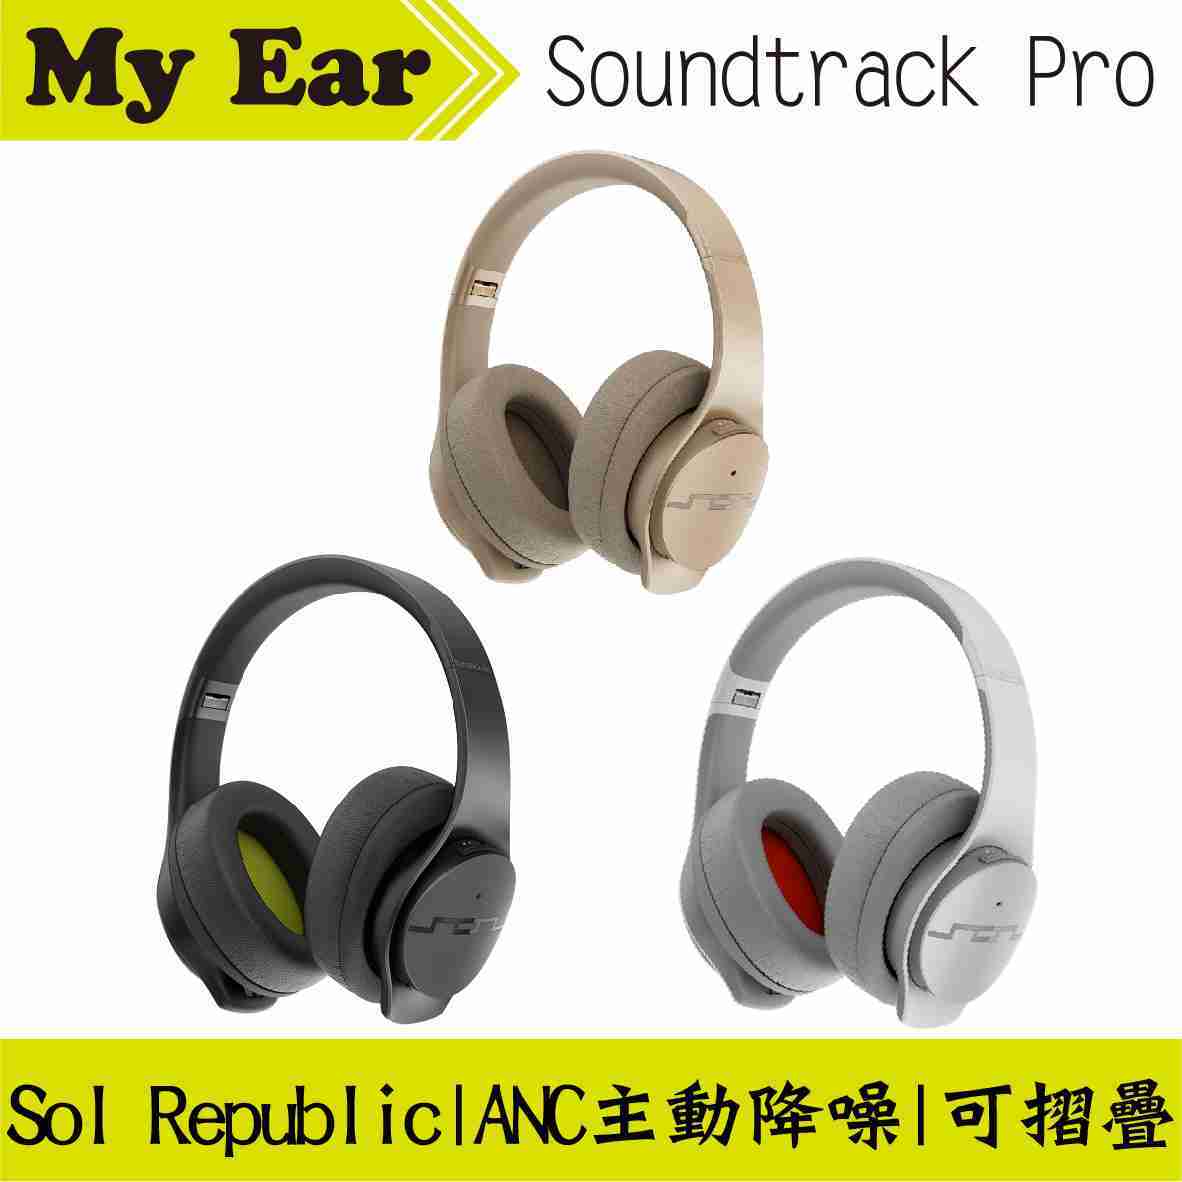 Sol Republic Soundtrack Pro 耳罩式 降噪藍牙耳機 多色 可摺疊 | My Ear耳機專門店